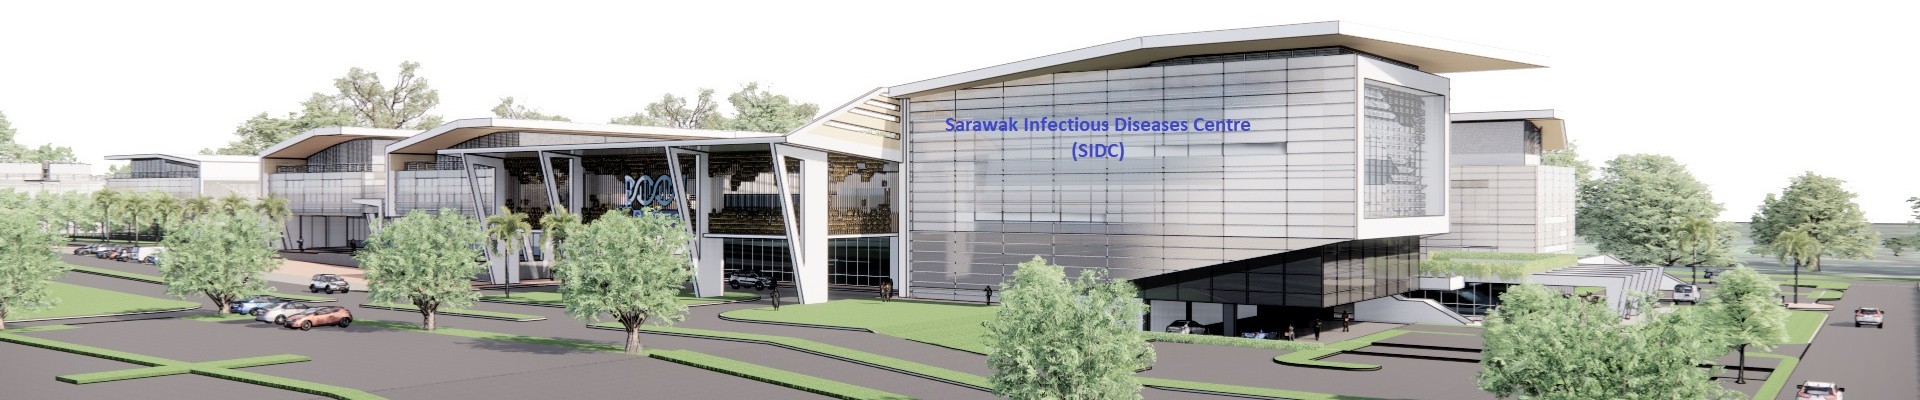 Sarawak Infectious Diseases Centre (SIDC)